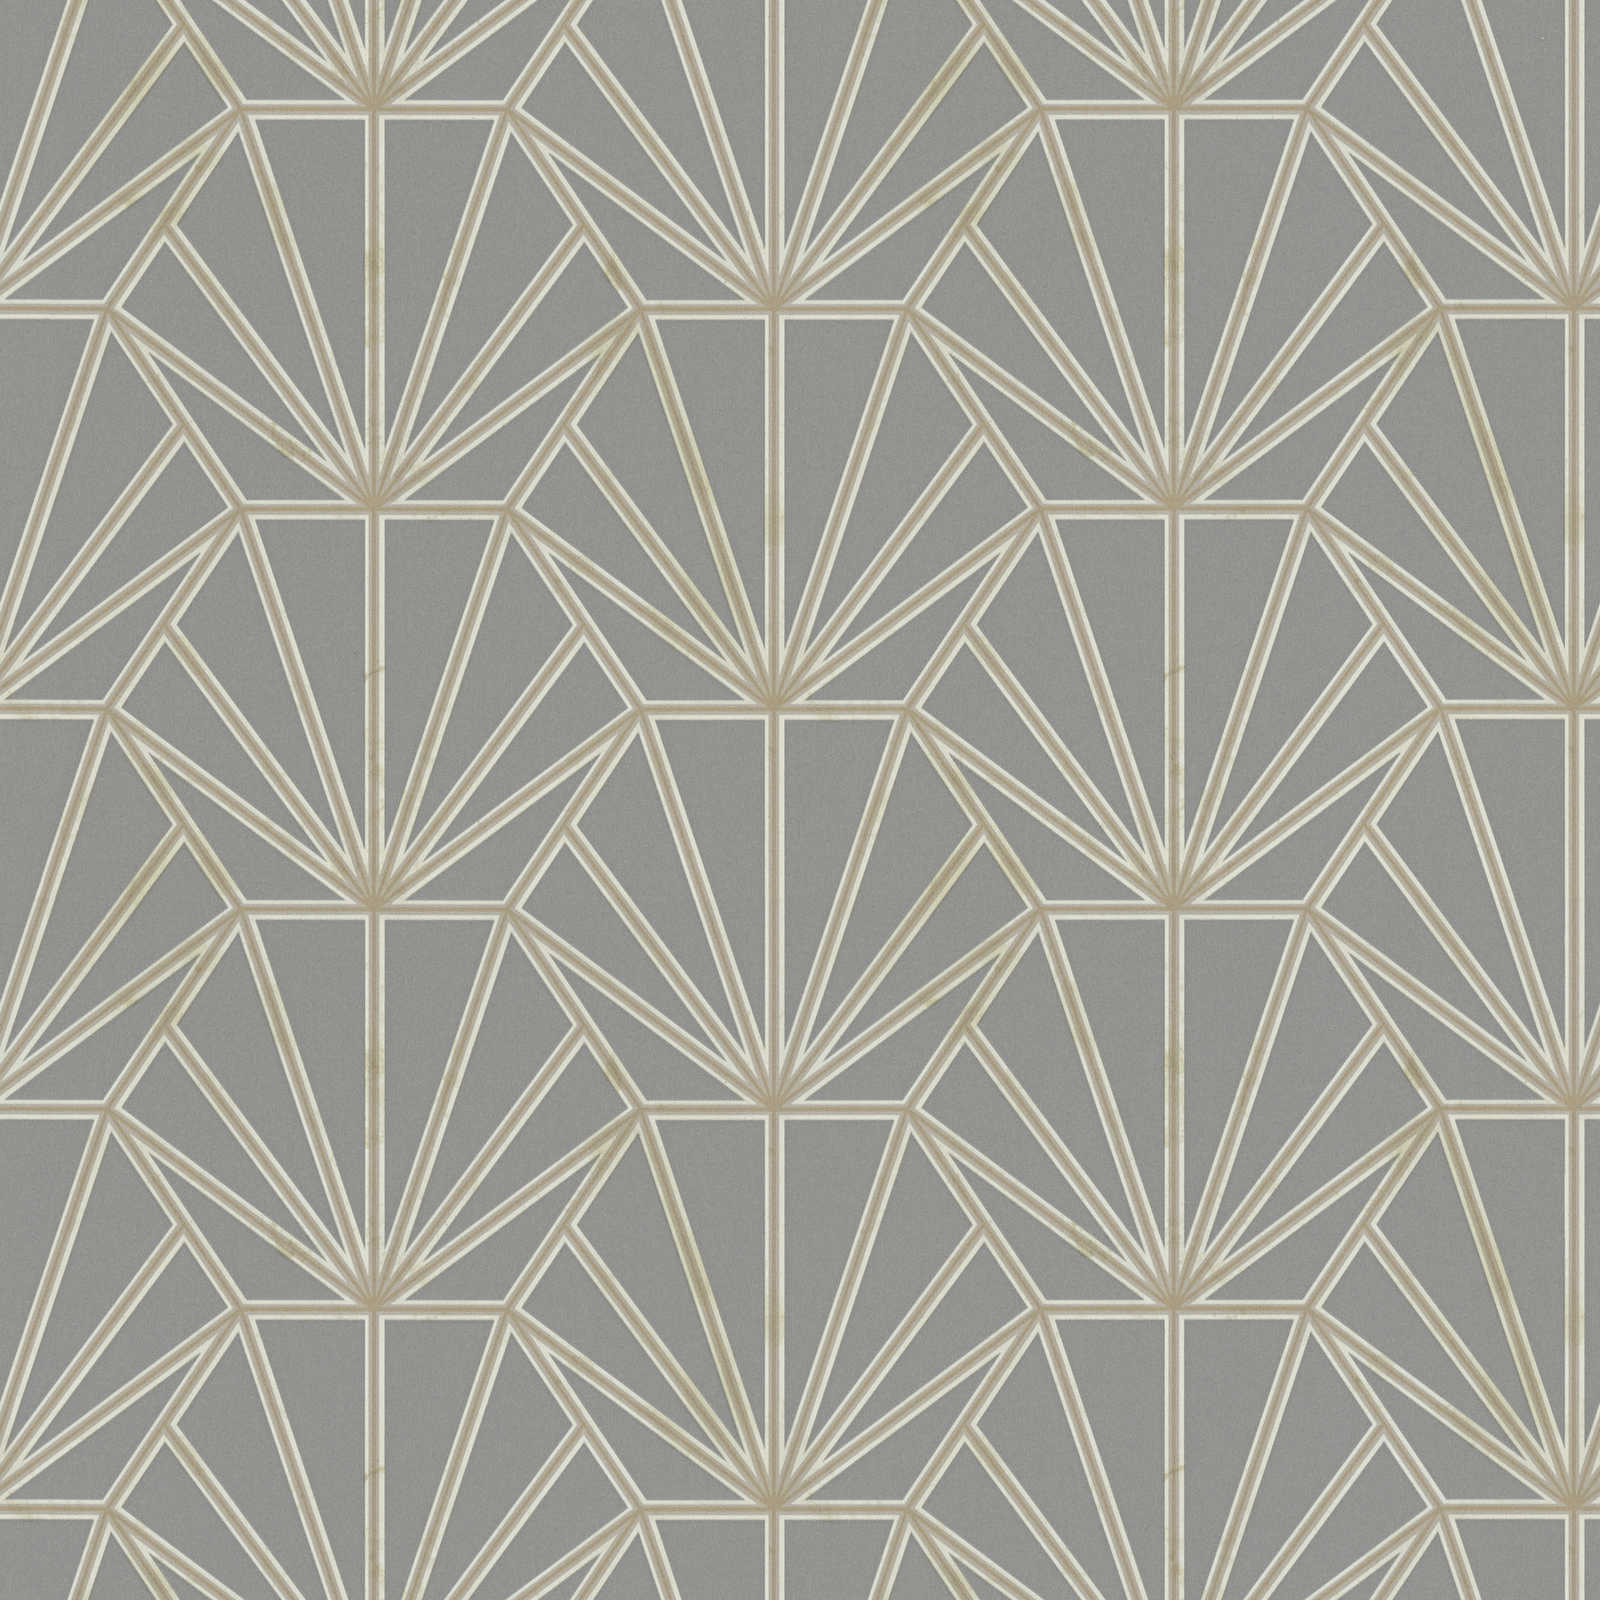 Wallpaper art deco pattern and line motif - grey, gold, white
